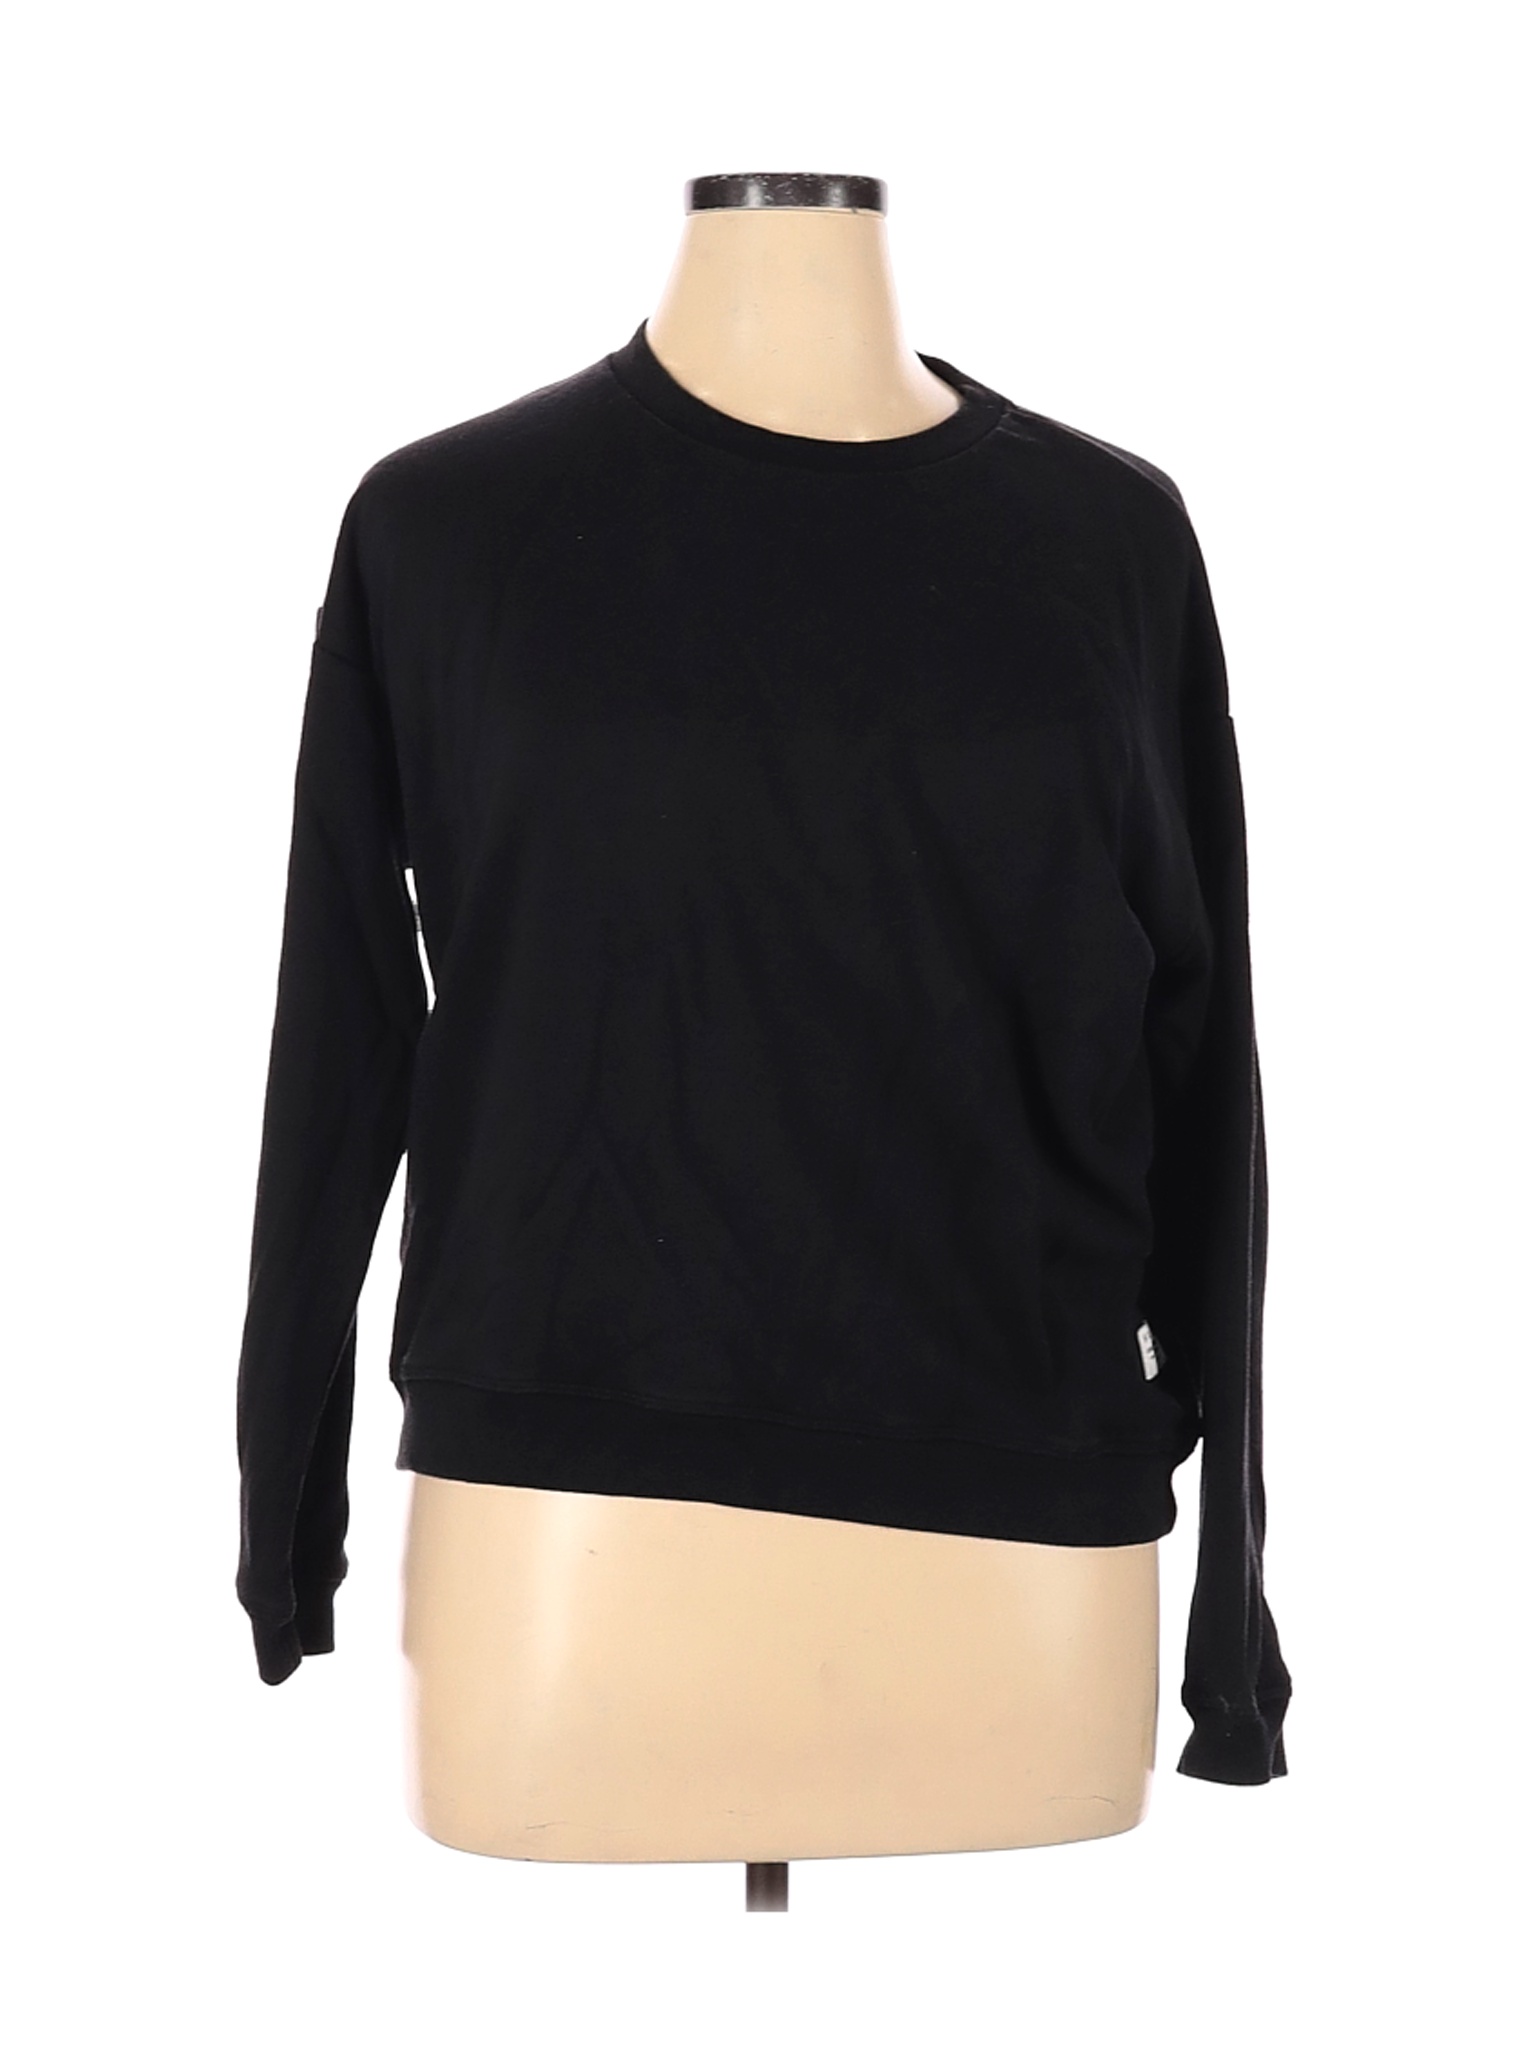 Huffer Clothing Co Women Black Sweatshirt 12 | eBay